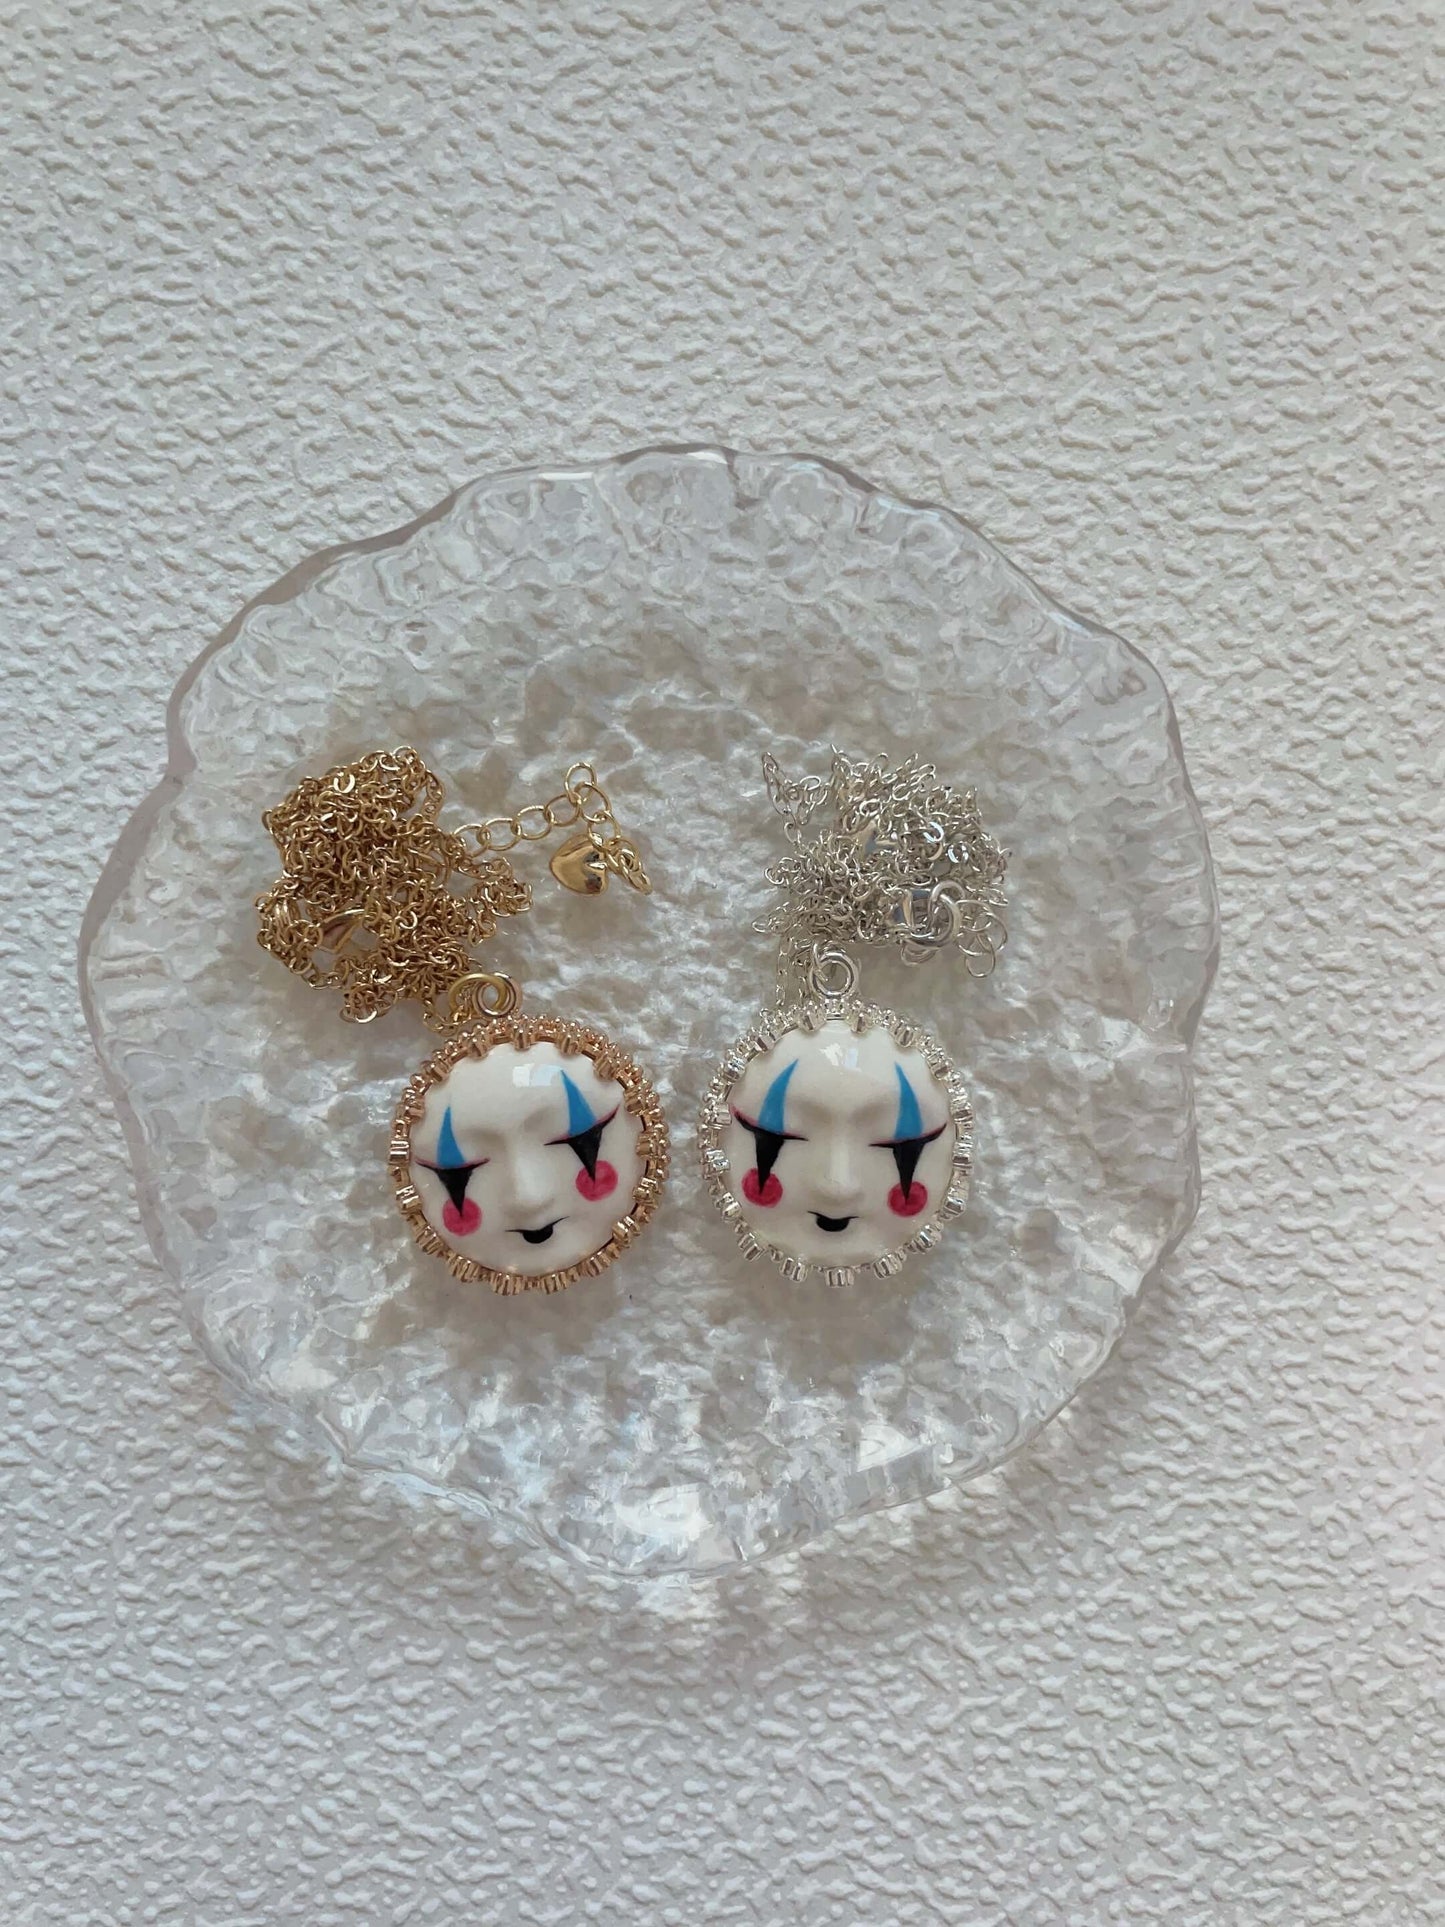 Handmade ceramic crown pendant